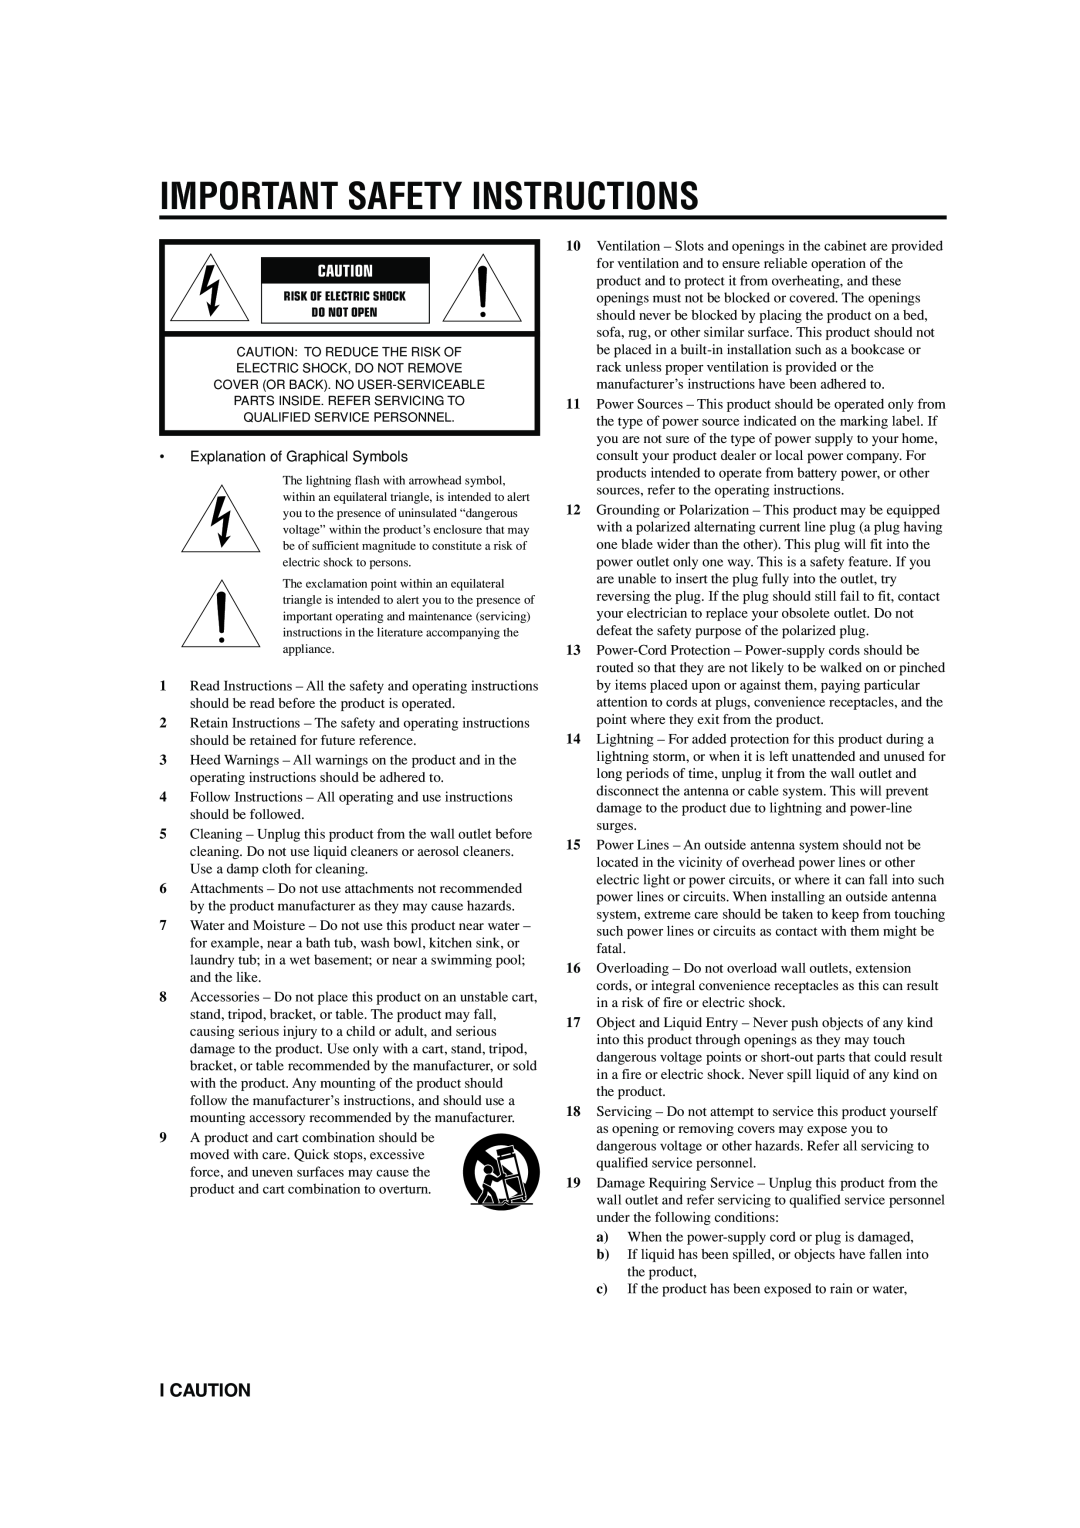 Yamaha RX-V740 owner manual I Caution, Important Safety Instructions 